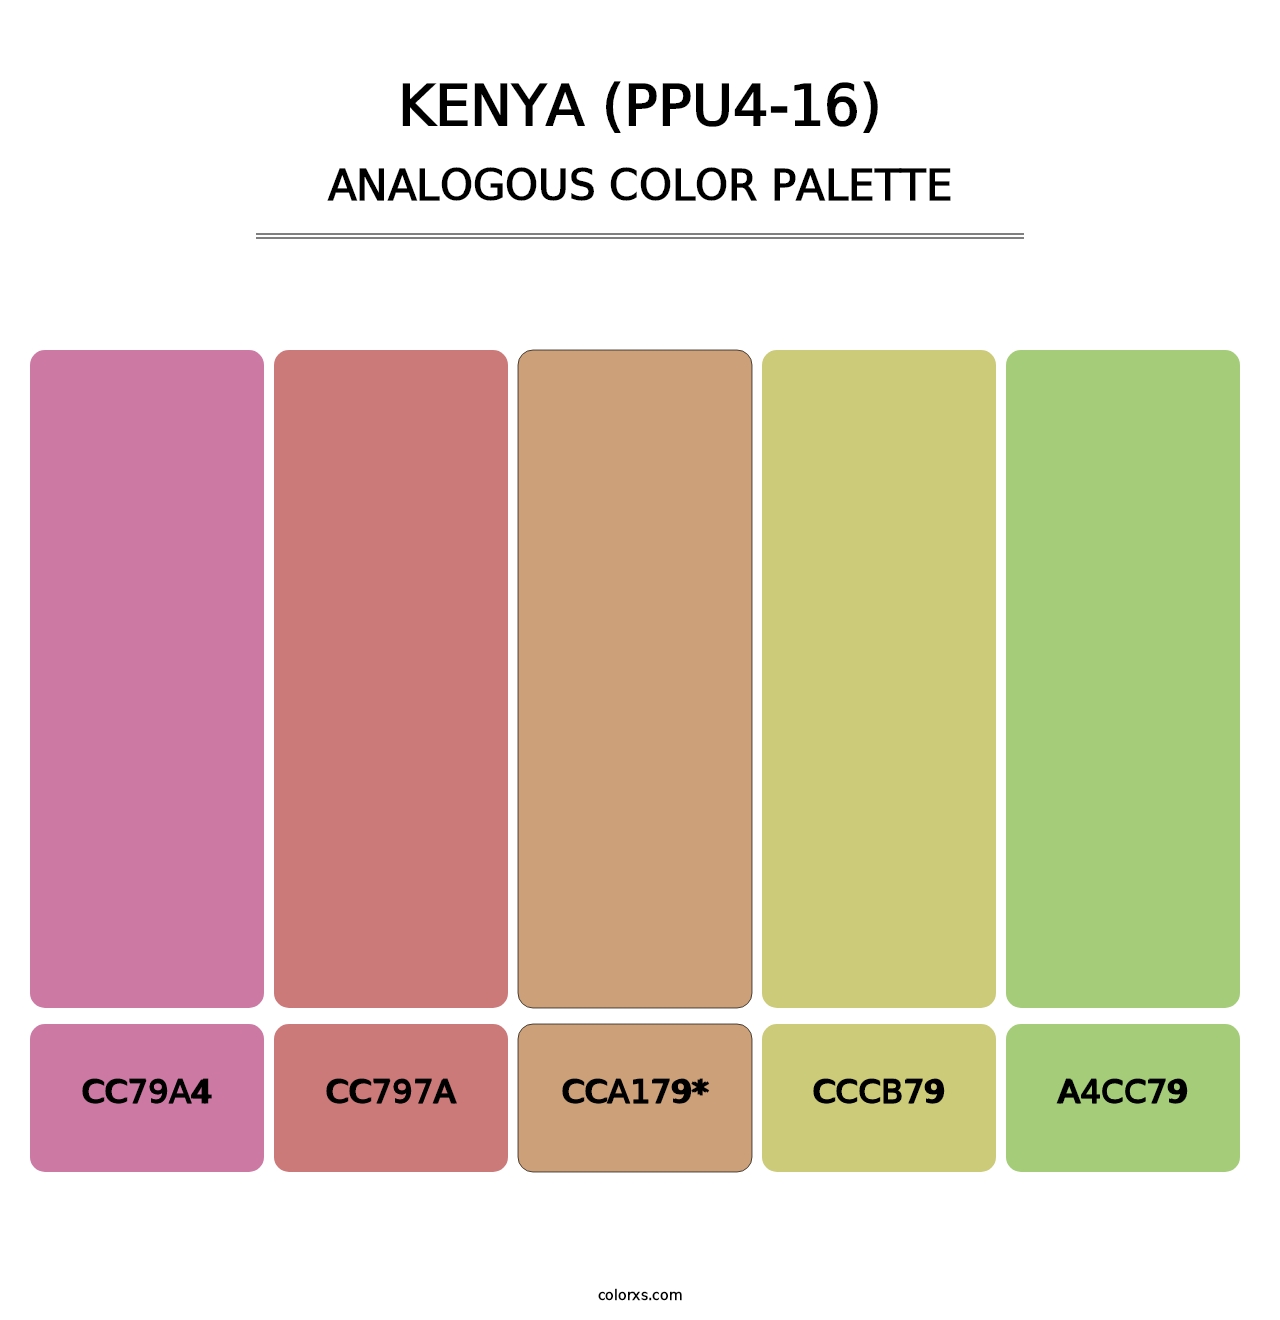 Kenya (PPU4-16) - Analogous Color Palette